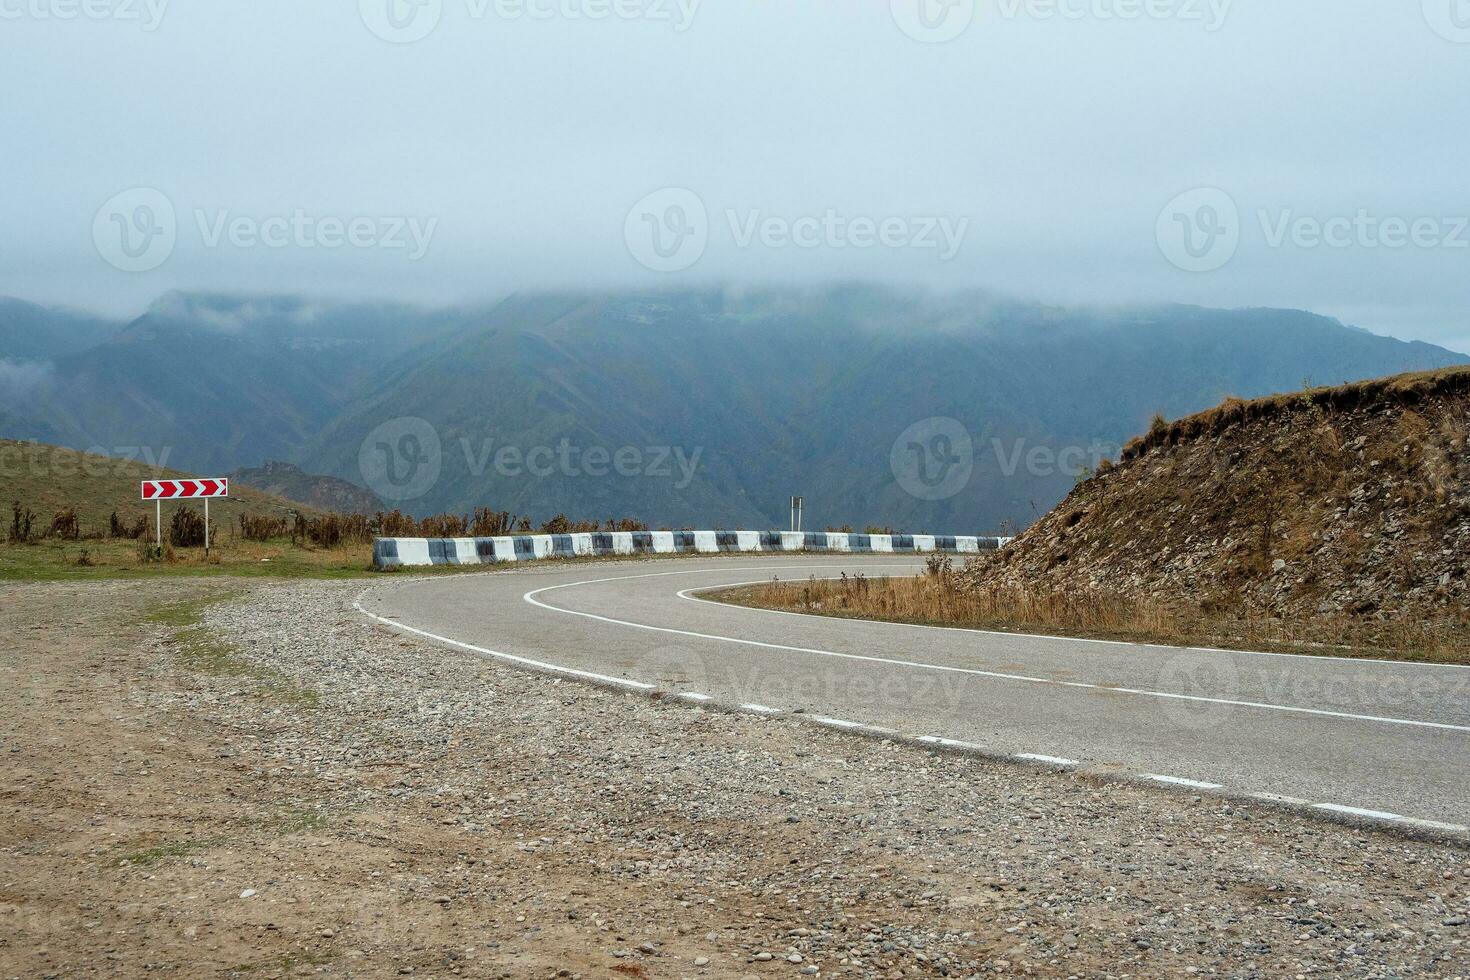 vacío Mañana autopista mediante el aprobar, Derecha giro . hermosa asfalto autopista, autopista, autopista mediante de caucásico paisaje montañas colinas a frío brumoso clima en medio octubre. foto